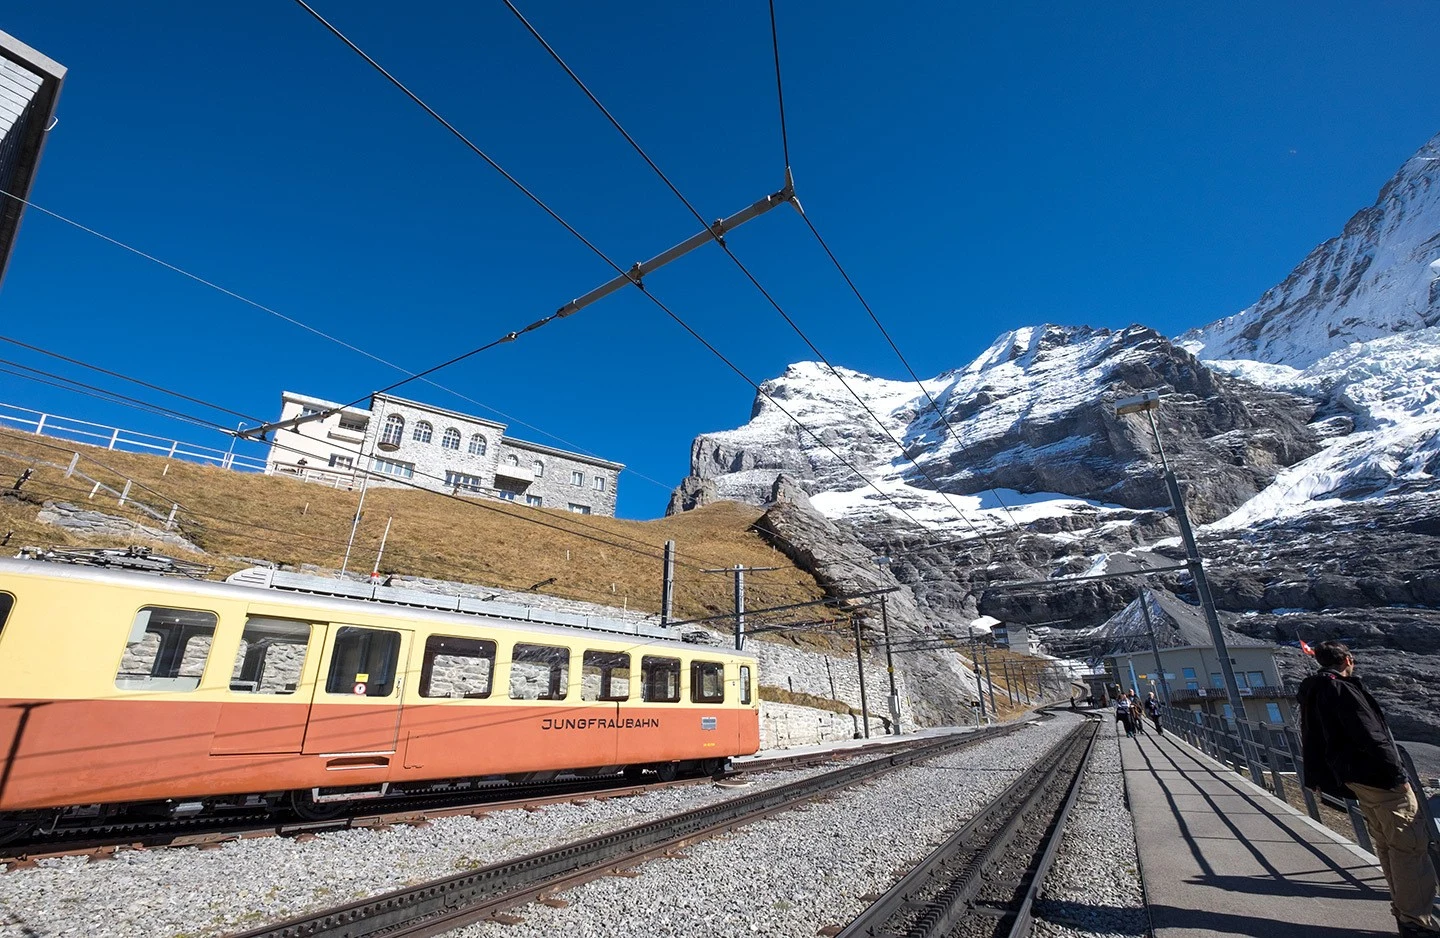 Jungfrau Railways, Switzerland